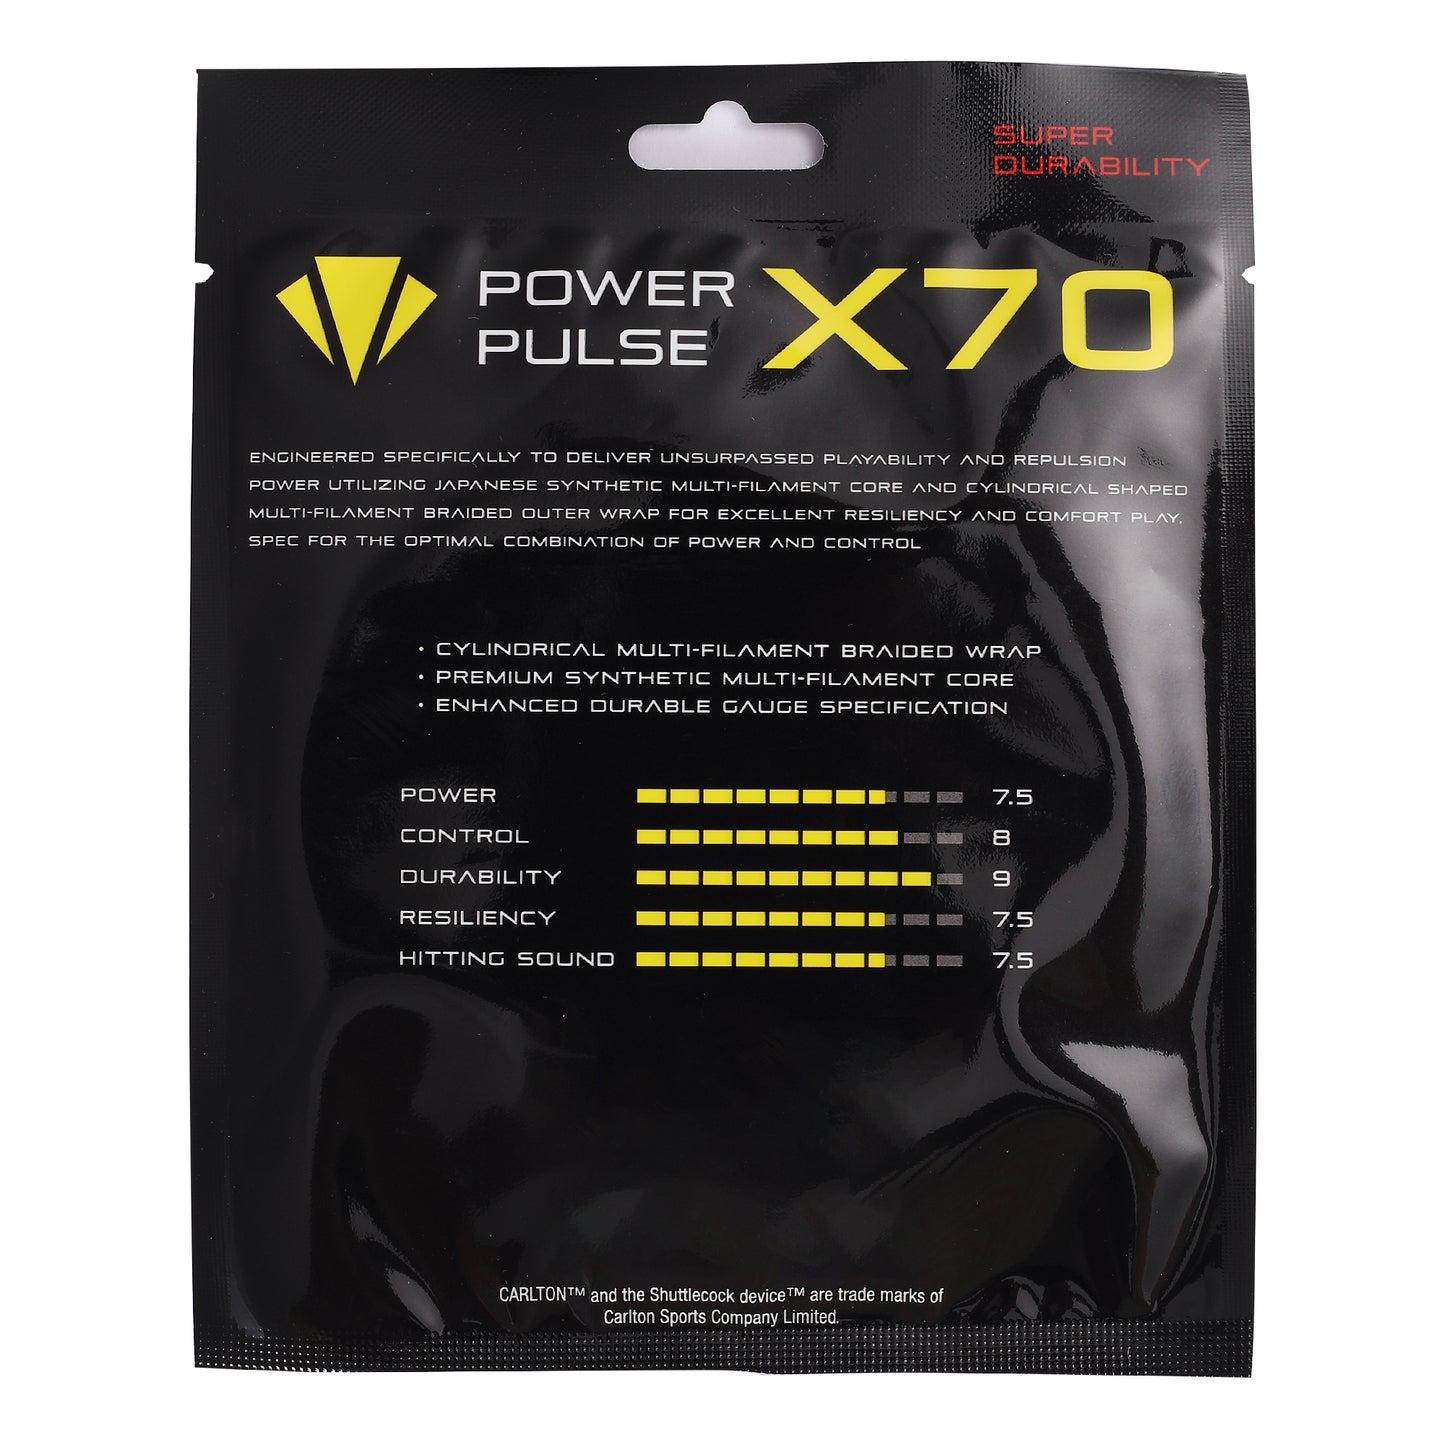 POWER PULSE X70 SUPER DURABILITY